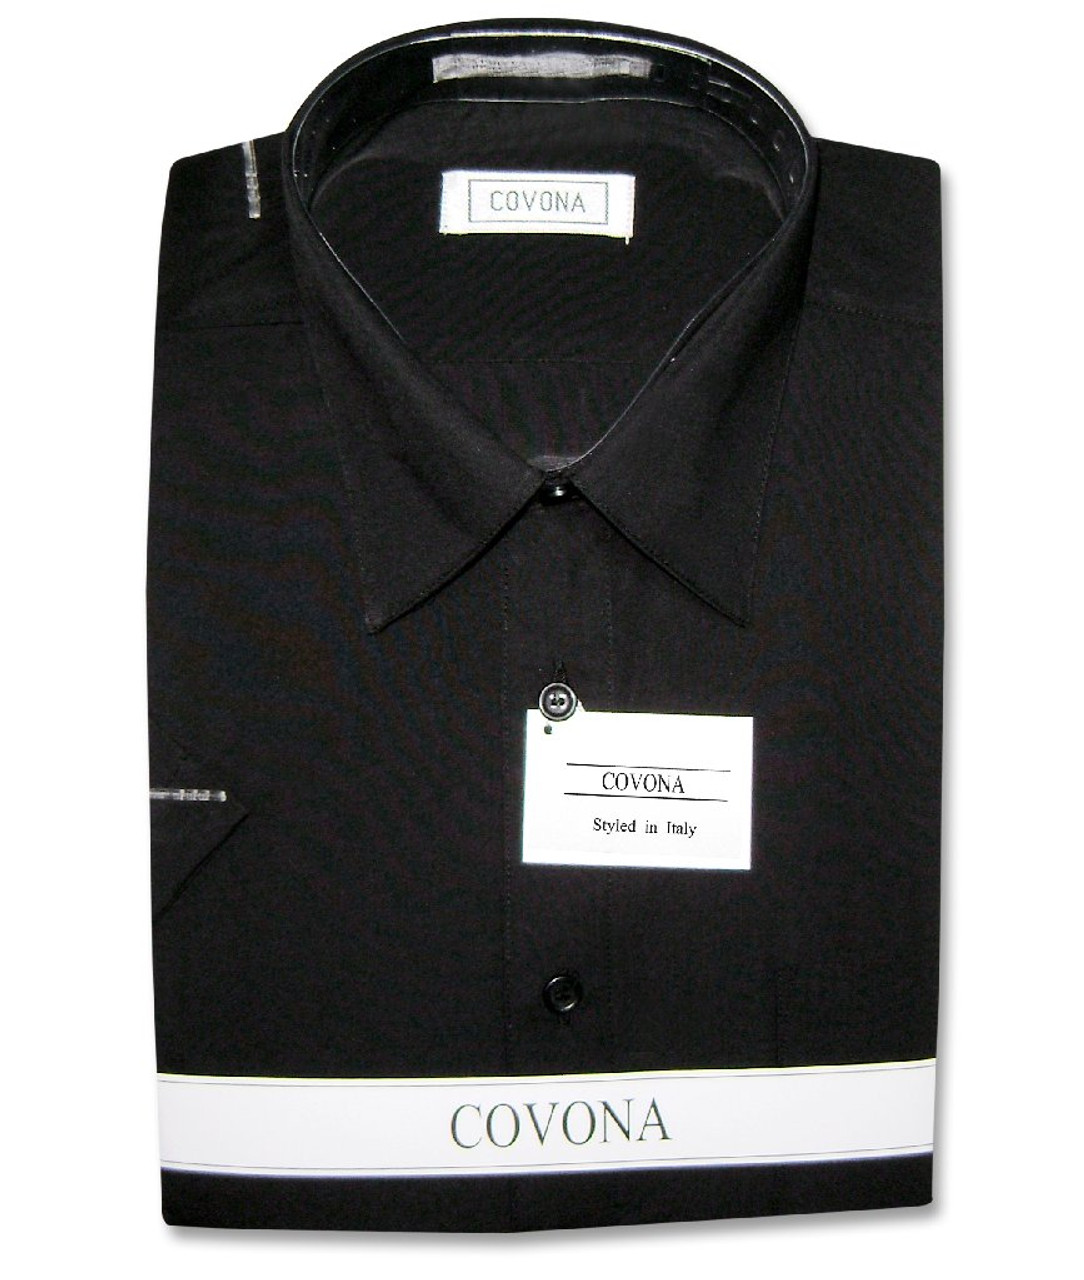 Covona Mens Short Sleeve Solid Black Color Dress Shirt